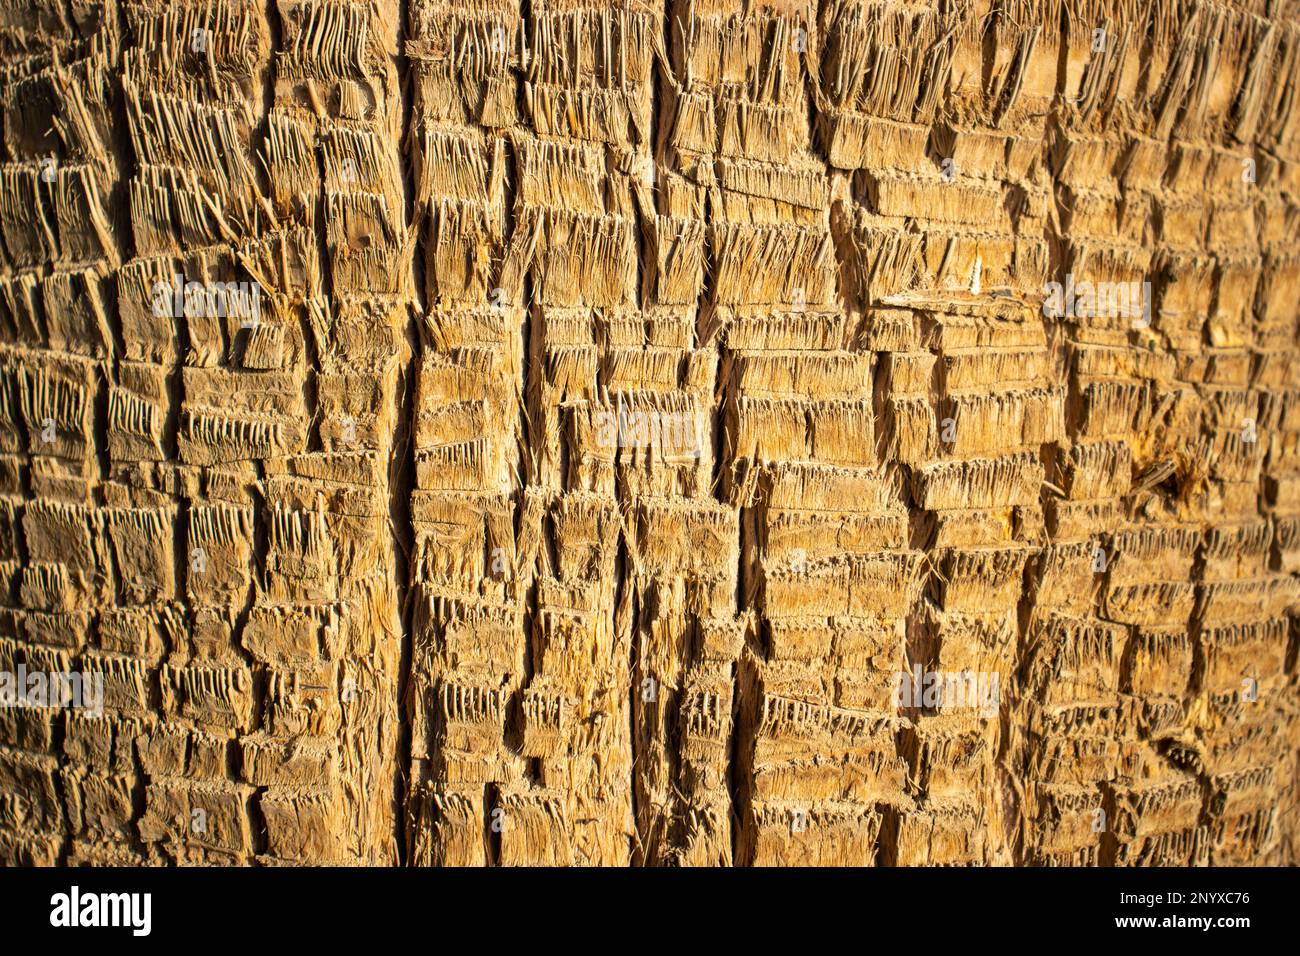 close up of the texture of the desert fan palm (Washingtonia filifera) tree trunk Stock Photo